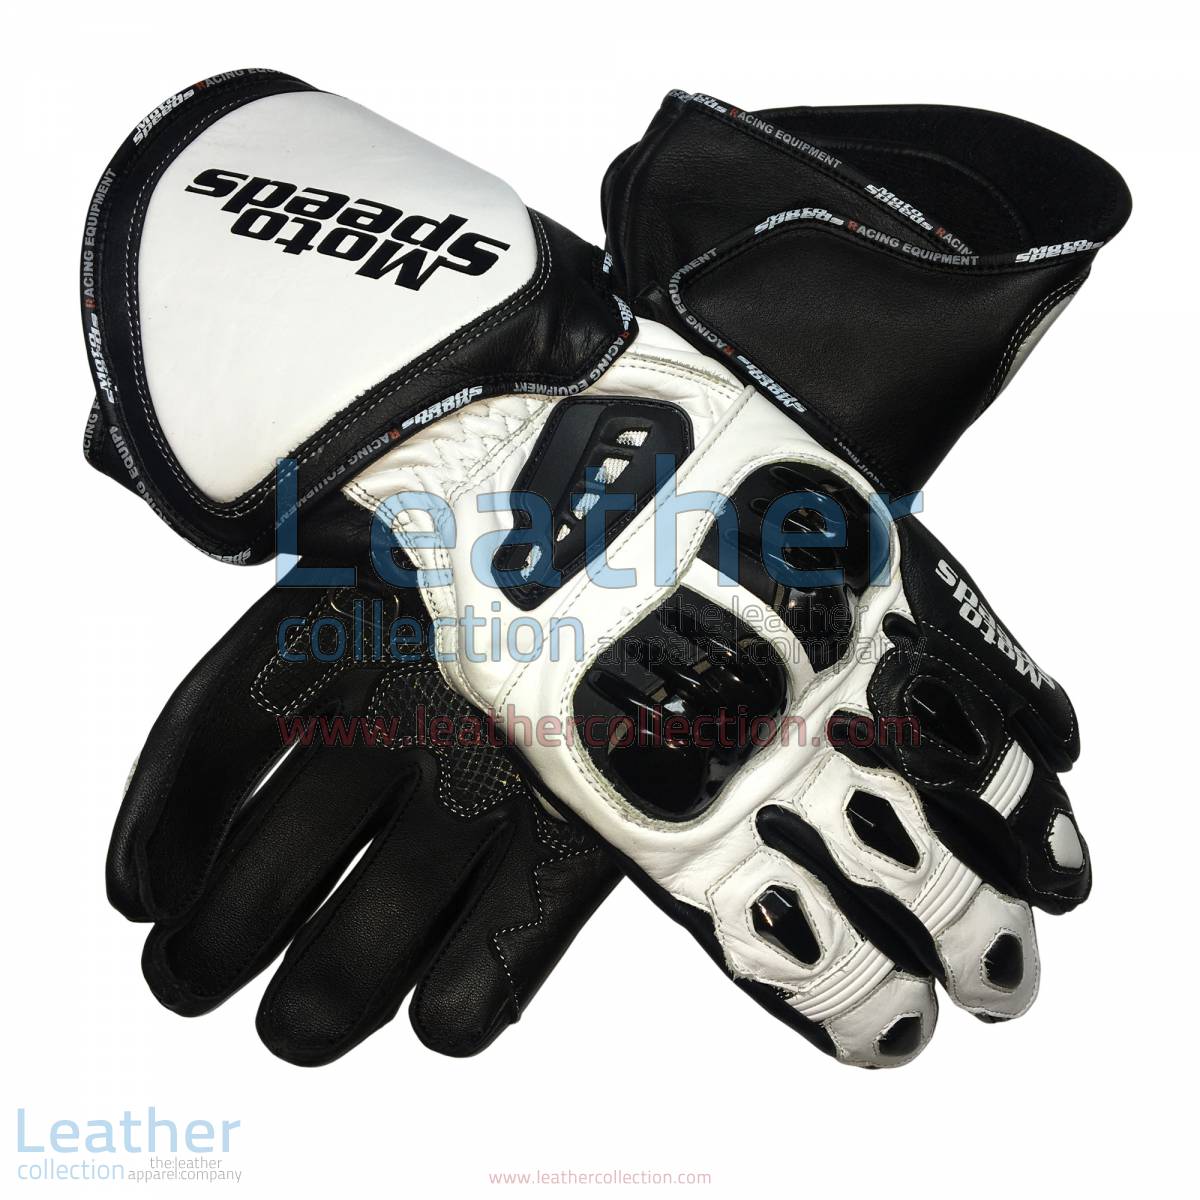 Alex Rins MotoGP 2017 Leather Gloves | Alex Rins MotoGP 2017 Leather Gloves